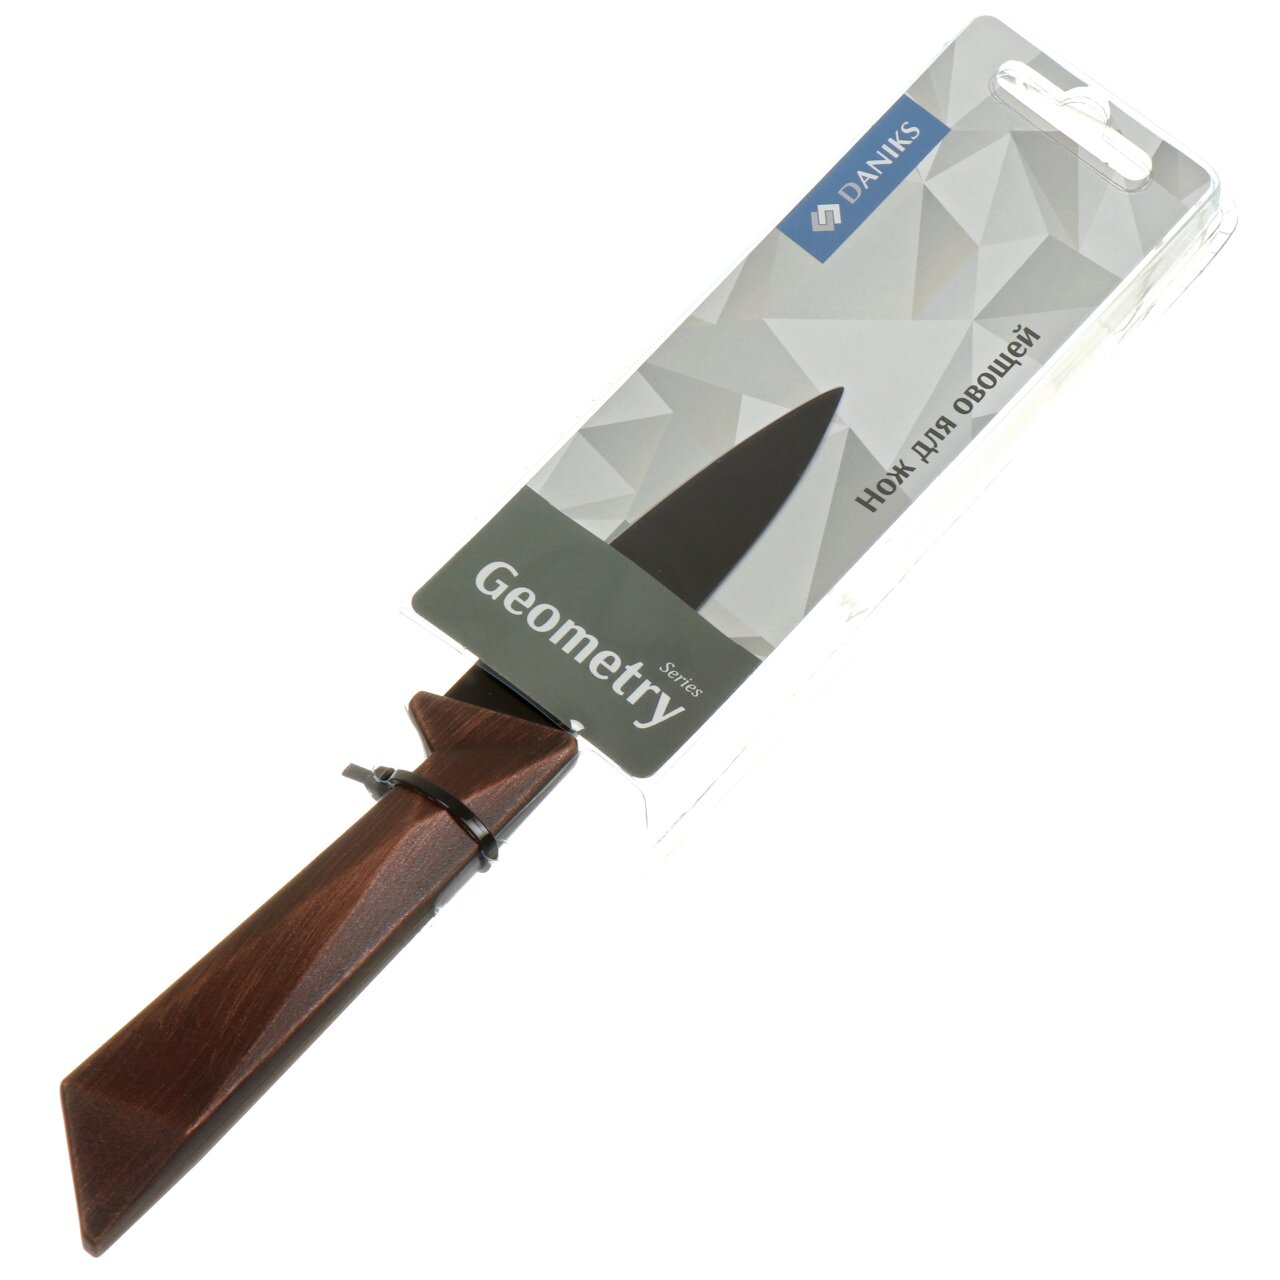 Нож кухонный Daniks, Геометрия, для овощей, нержавеющая сталь, 9 см, рукоятка пластик, JA20200944-5 нож для овощей regent inox длина 90 210 мм